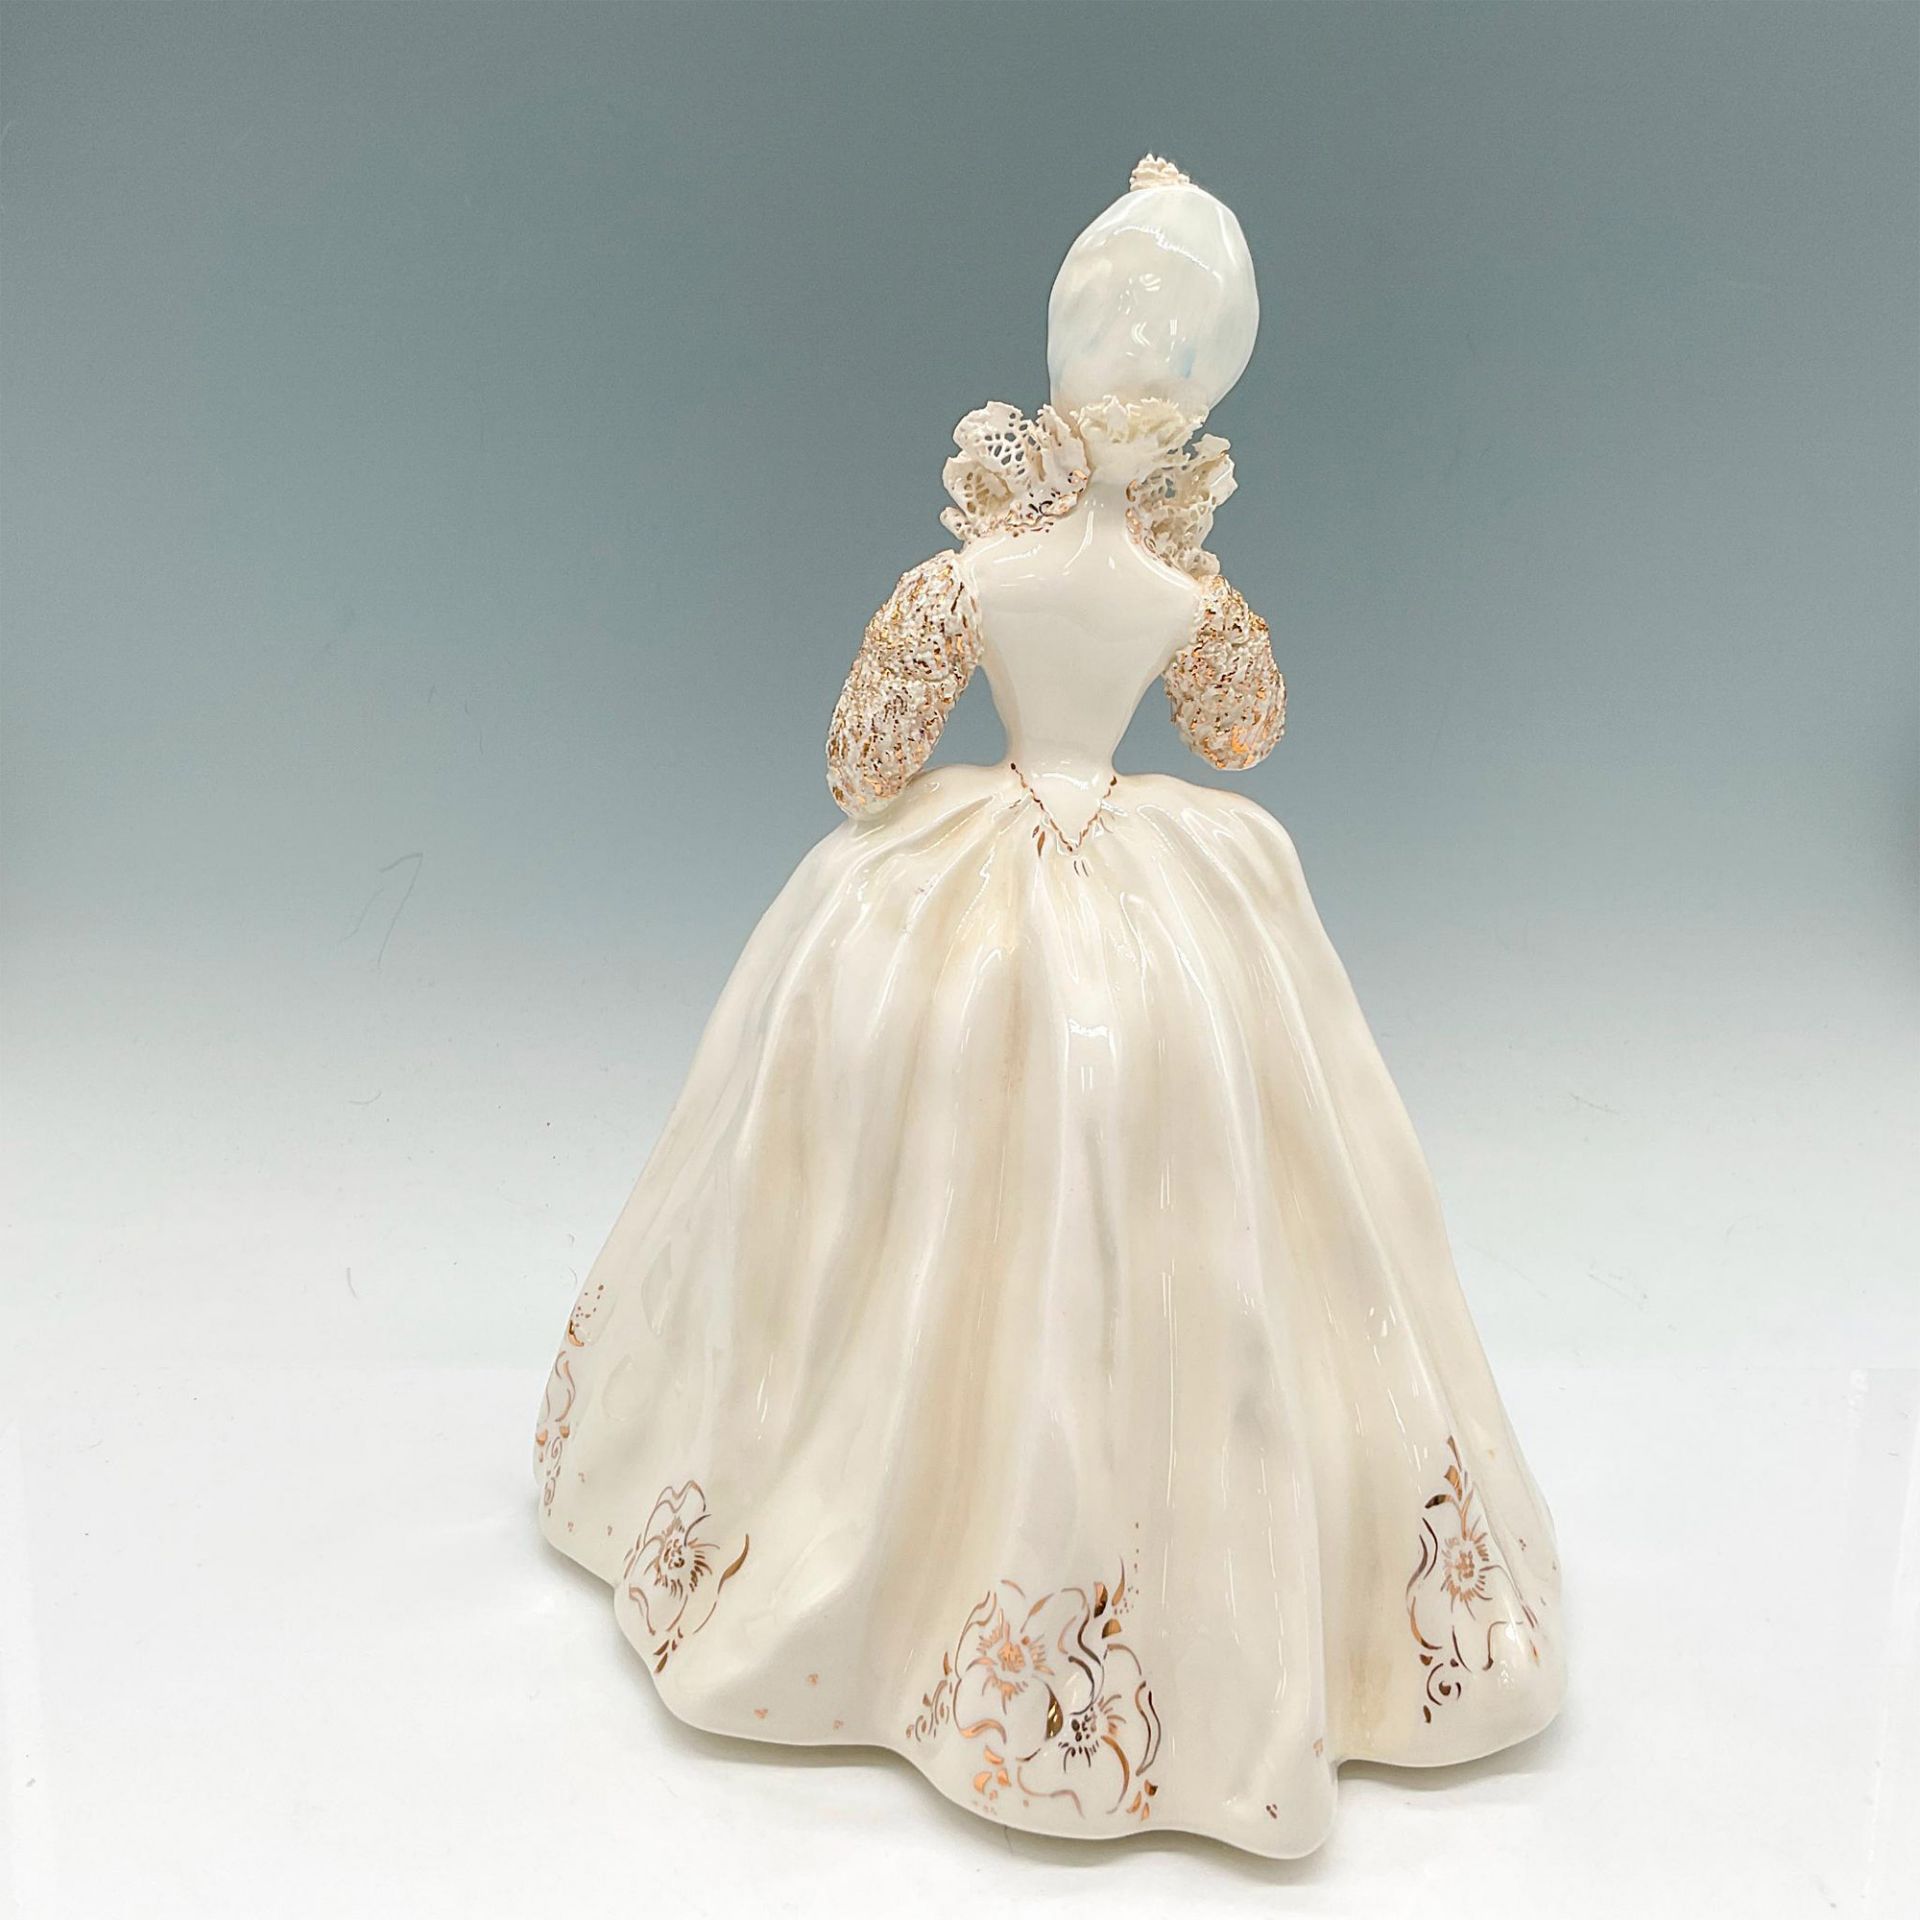 Florence Ceramics Porcelain Figurine, Marie Antoinette - Image 2 of 3